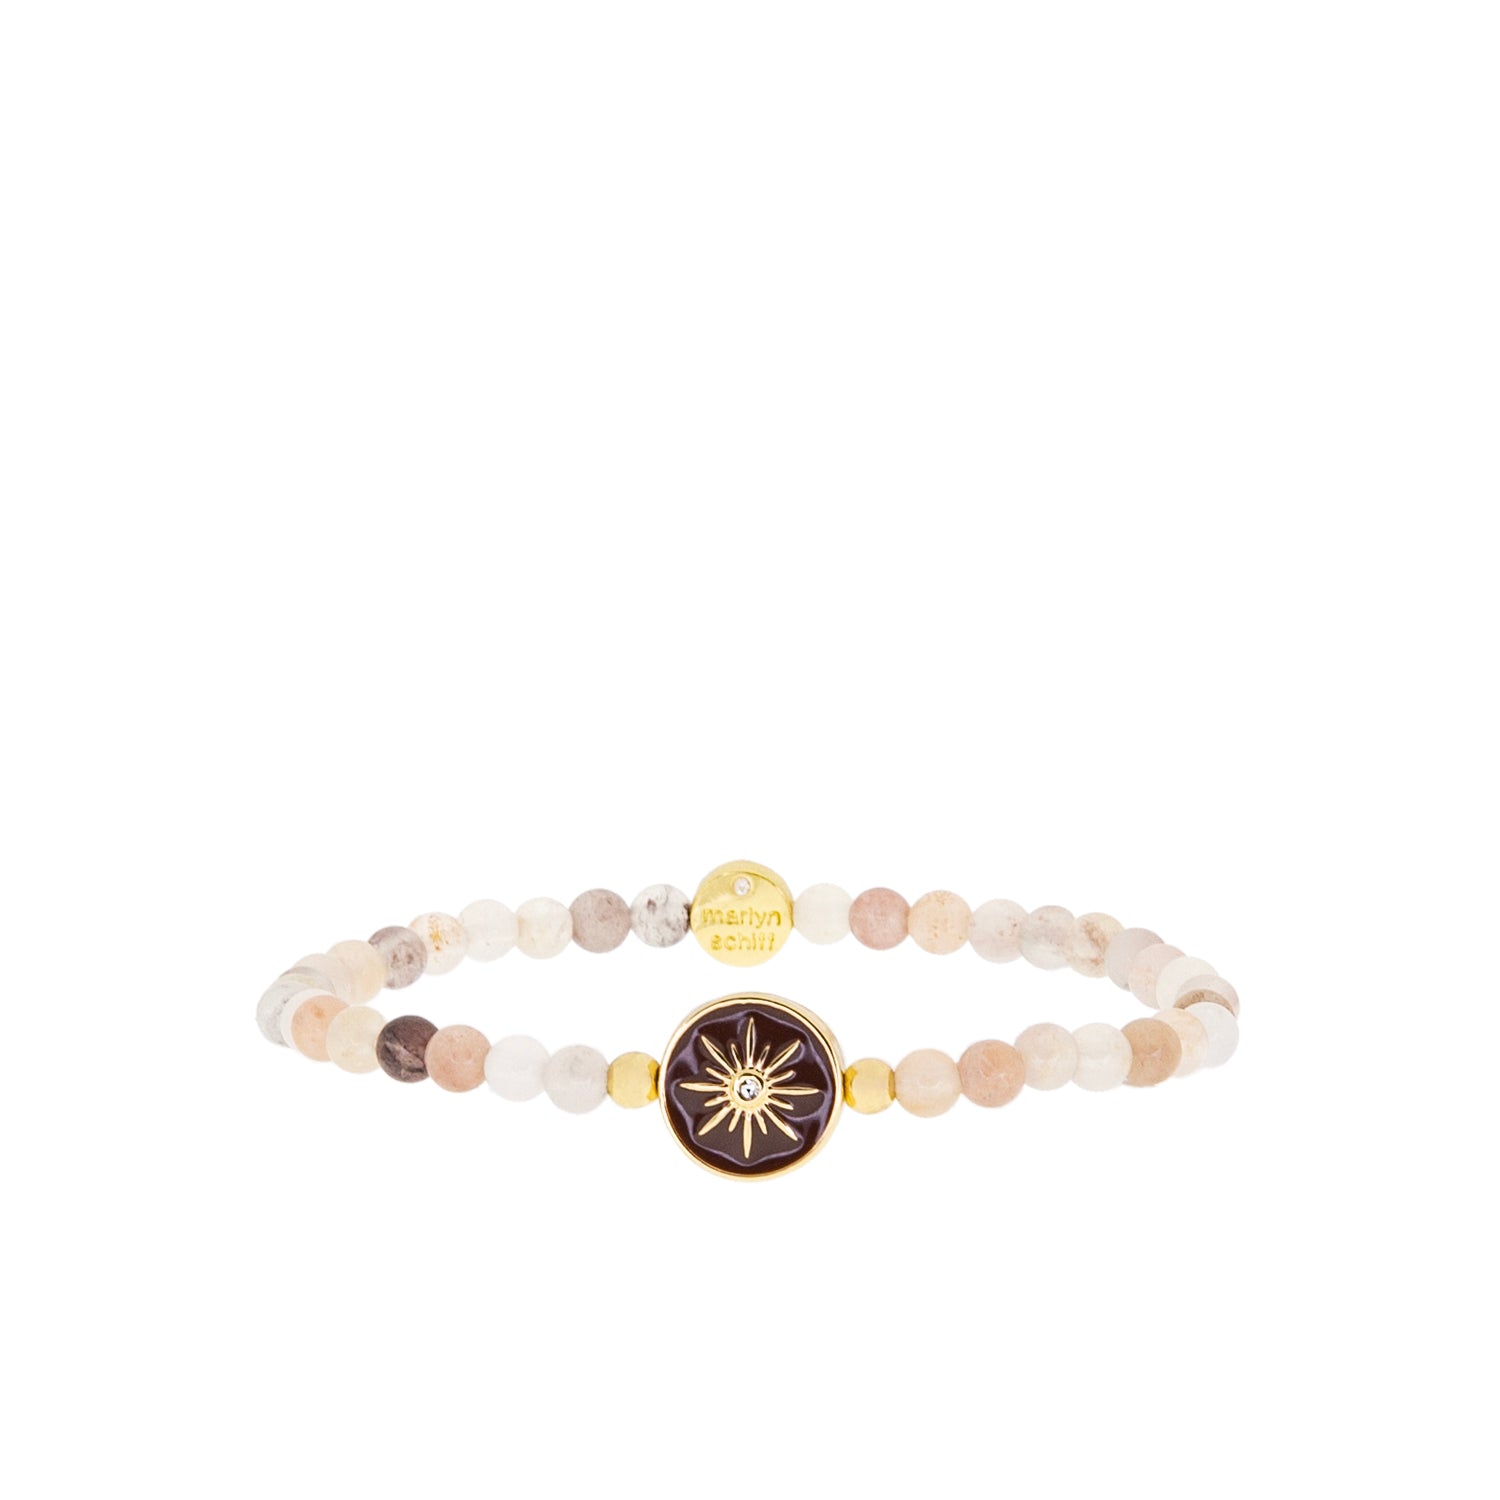 semi precious stone bracelet with starburst